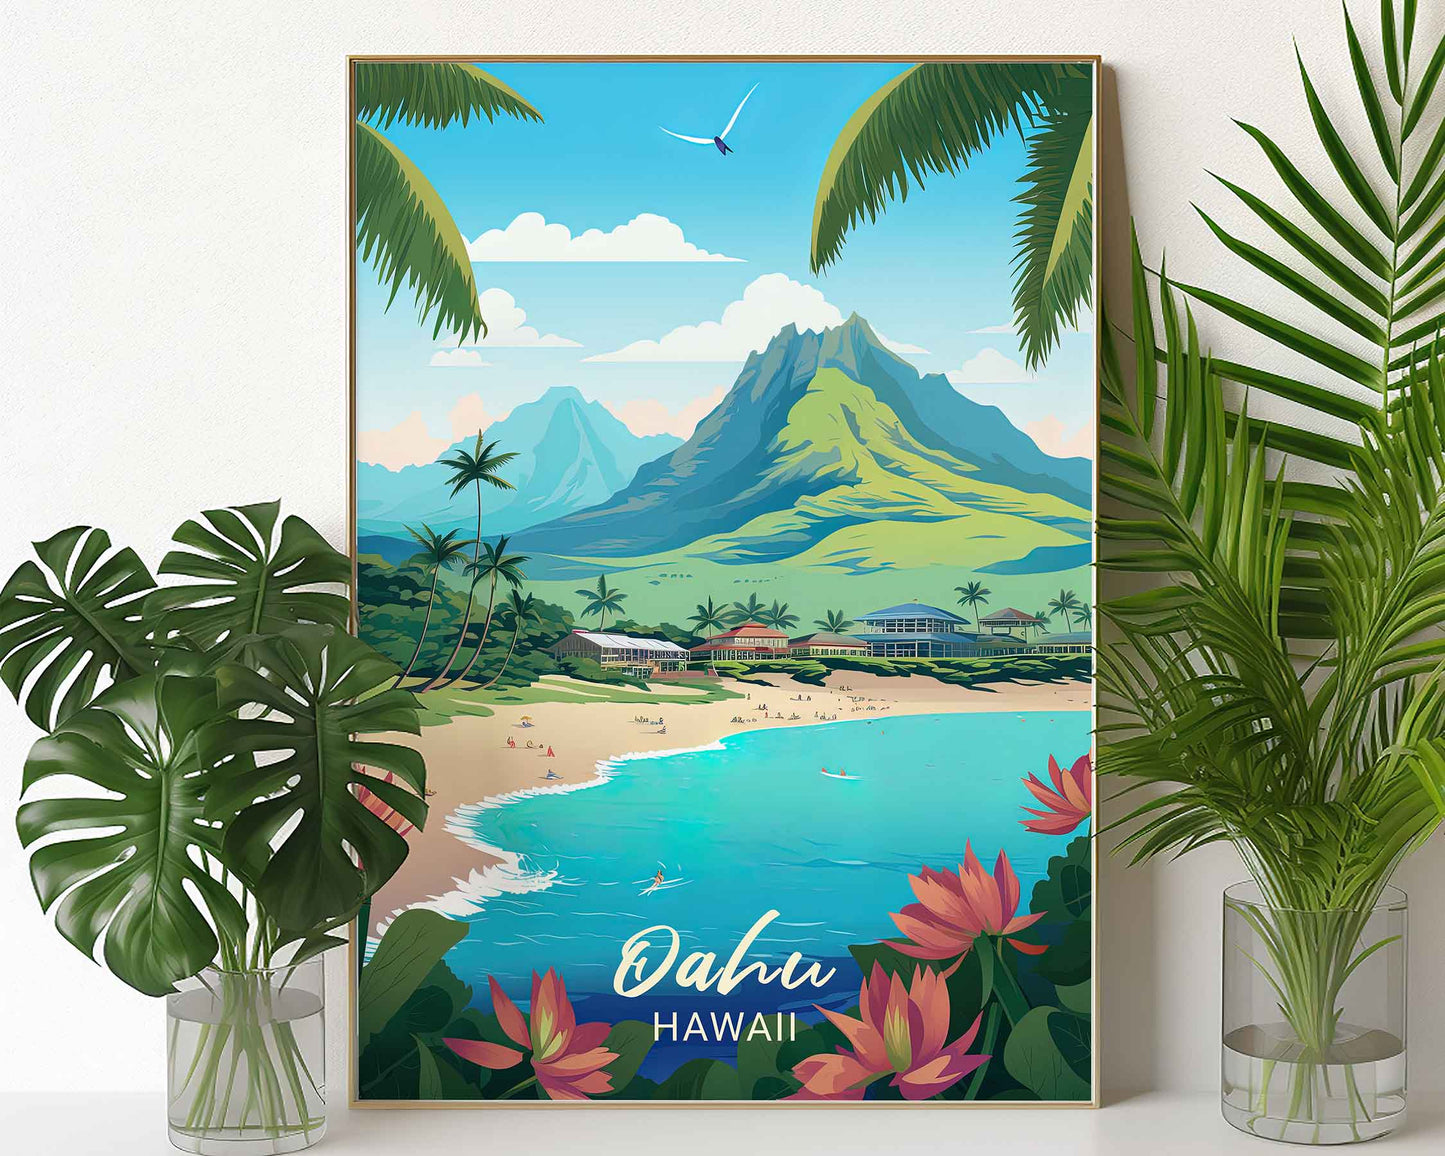 Framed Image of Oahu Hawaii Illustration Travel Poster Prints Wall Art